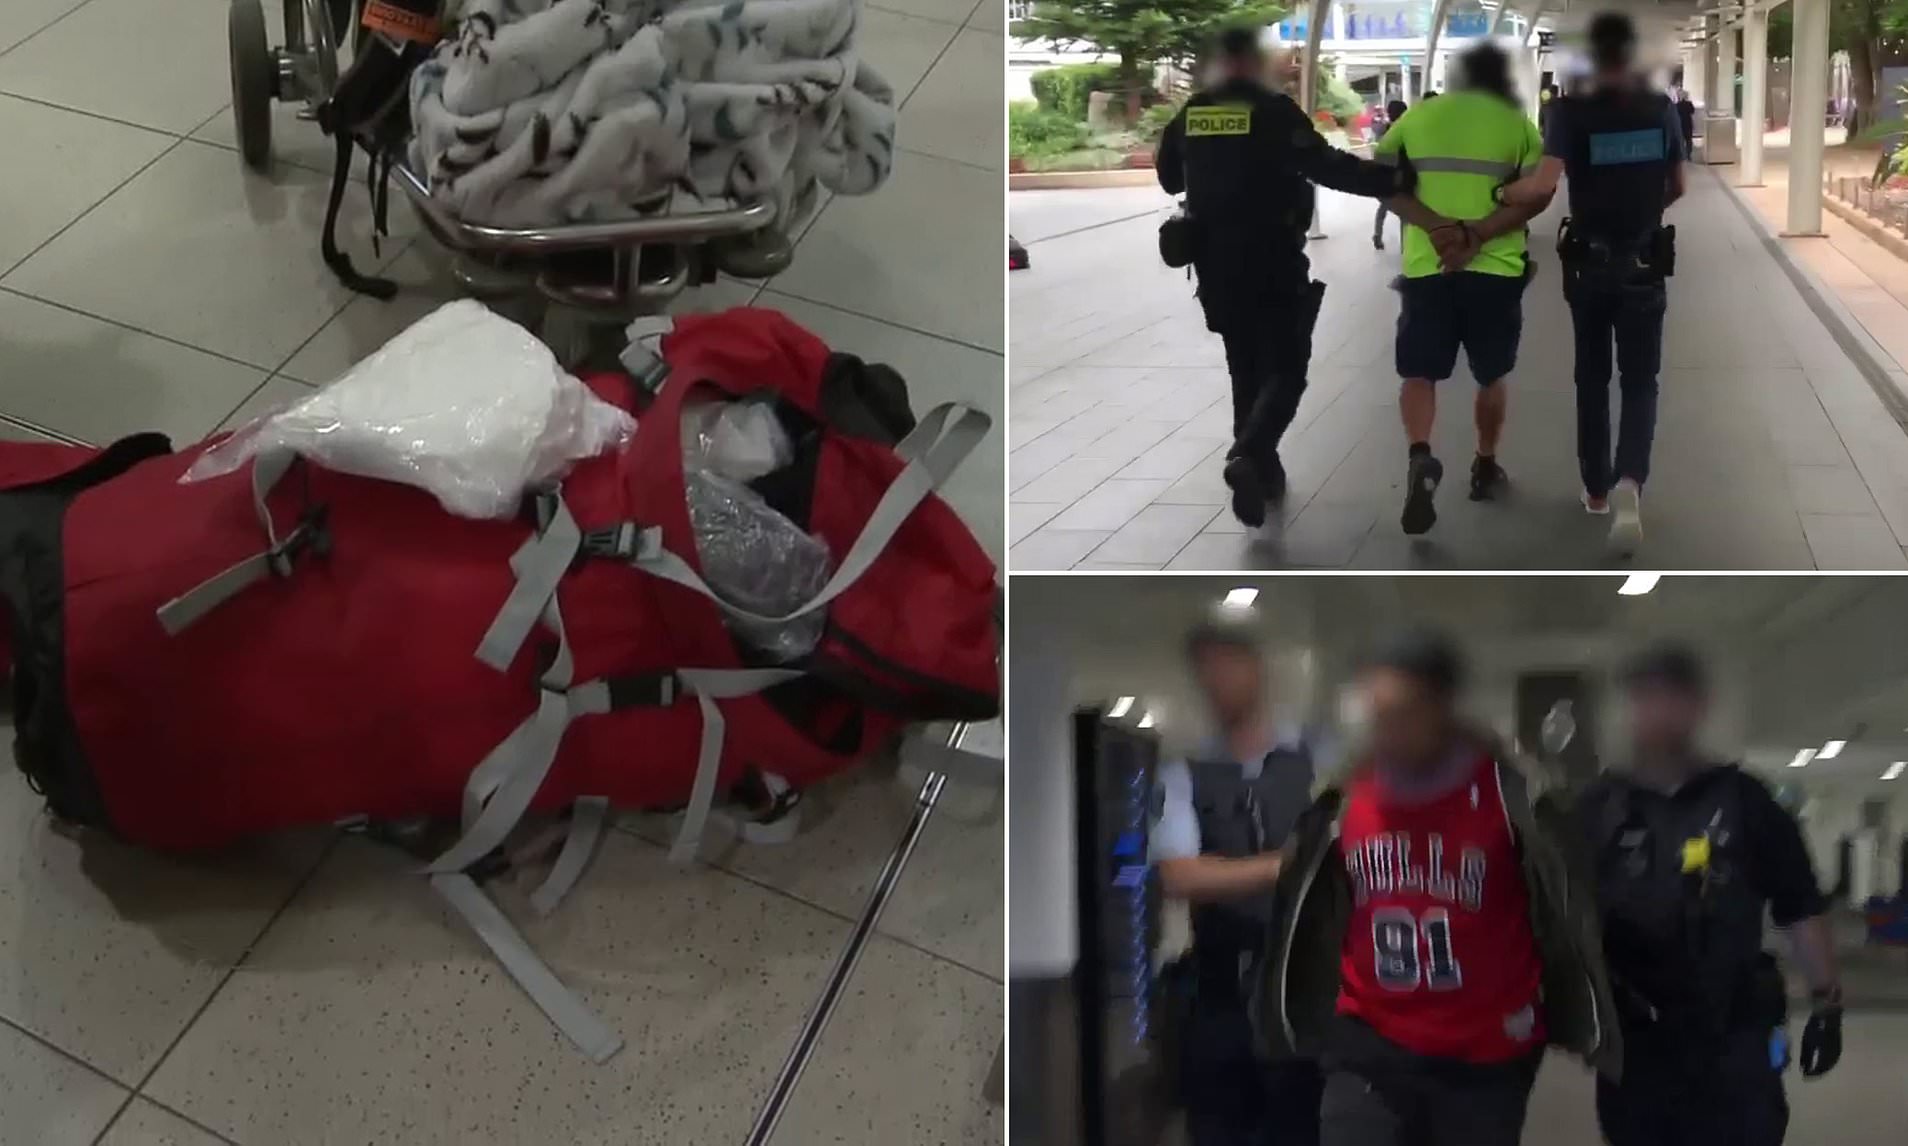 38kg meth operation at Sydney Airport